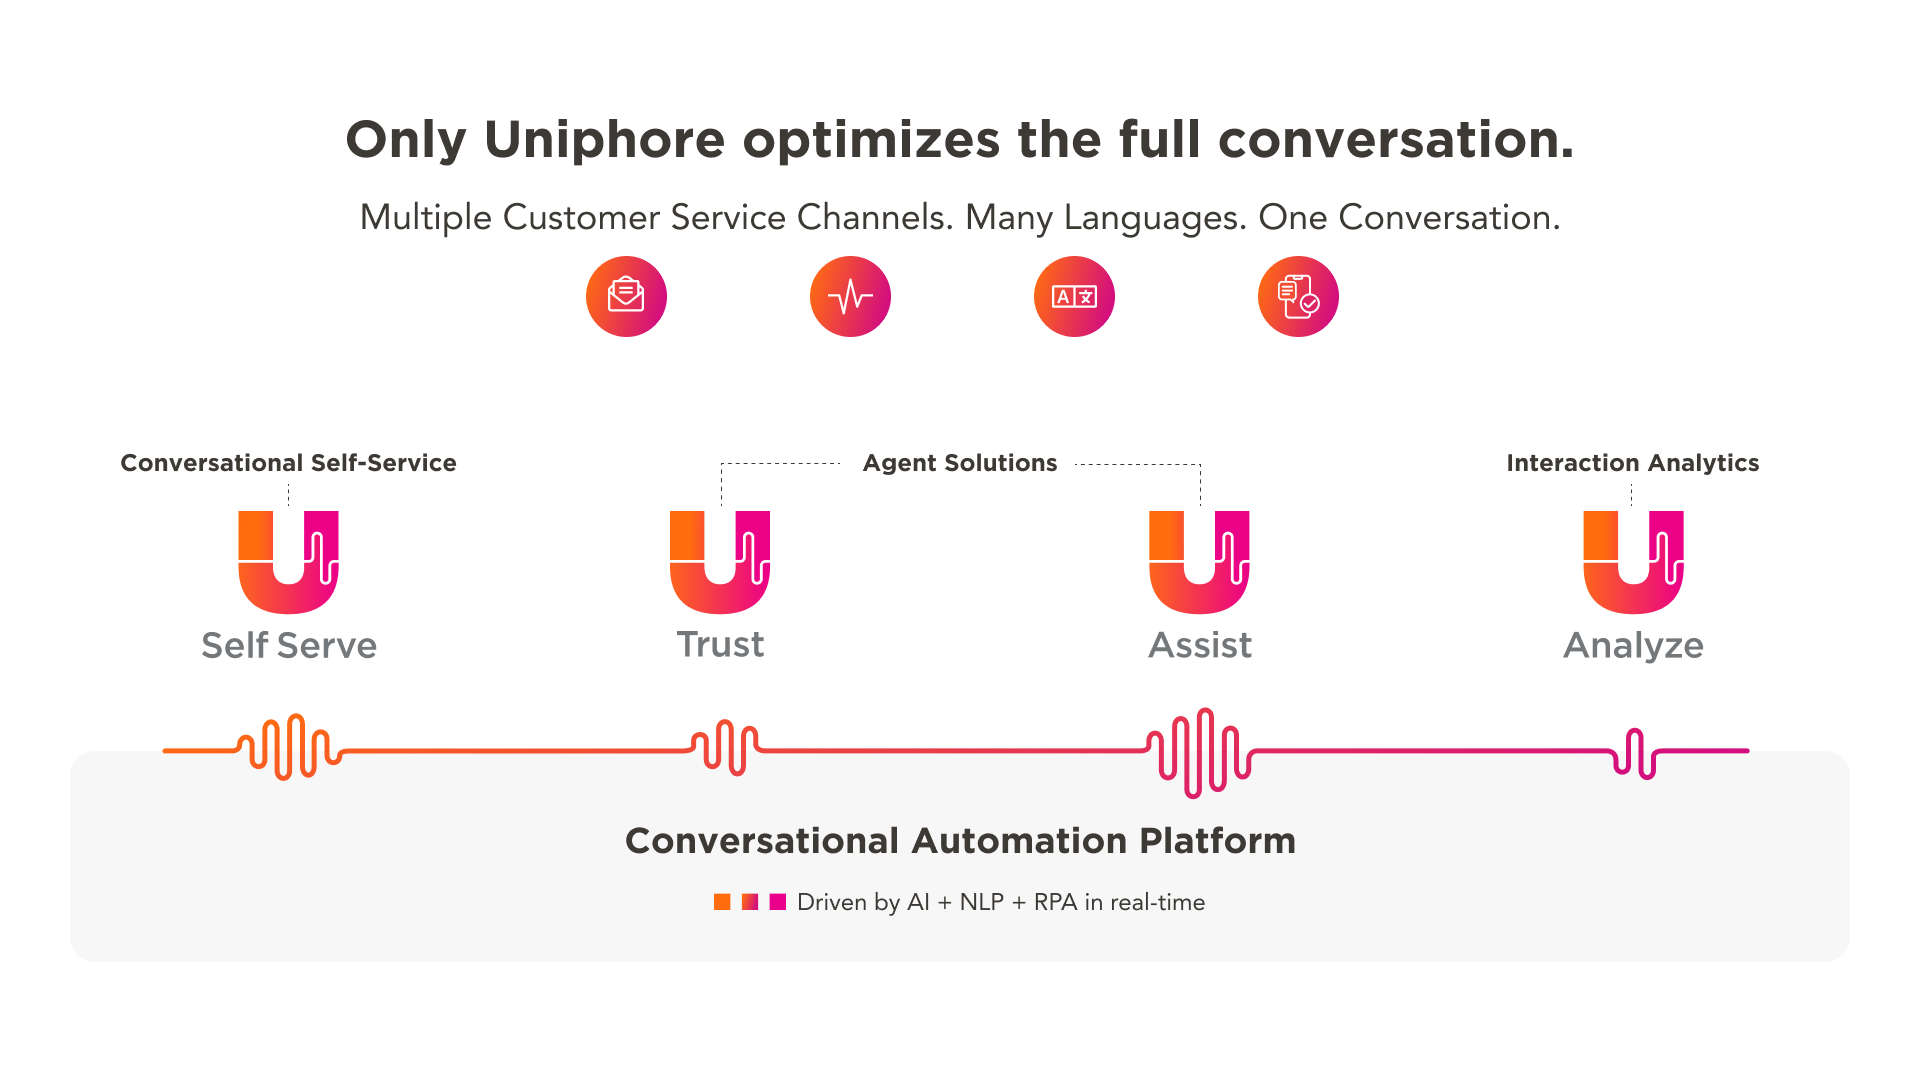 Onlyphone optimizes conversations using its conversational automation platform.